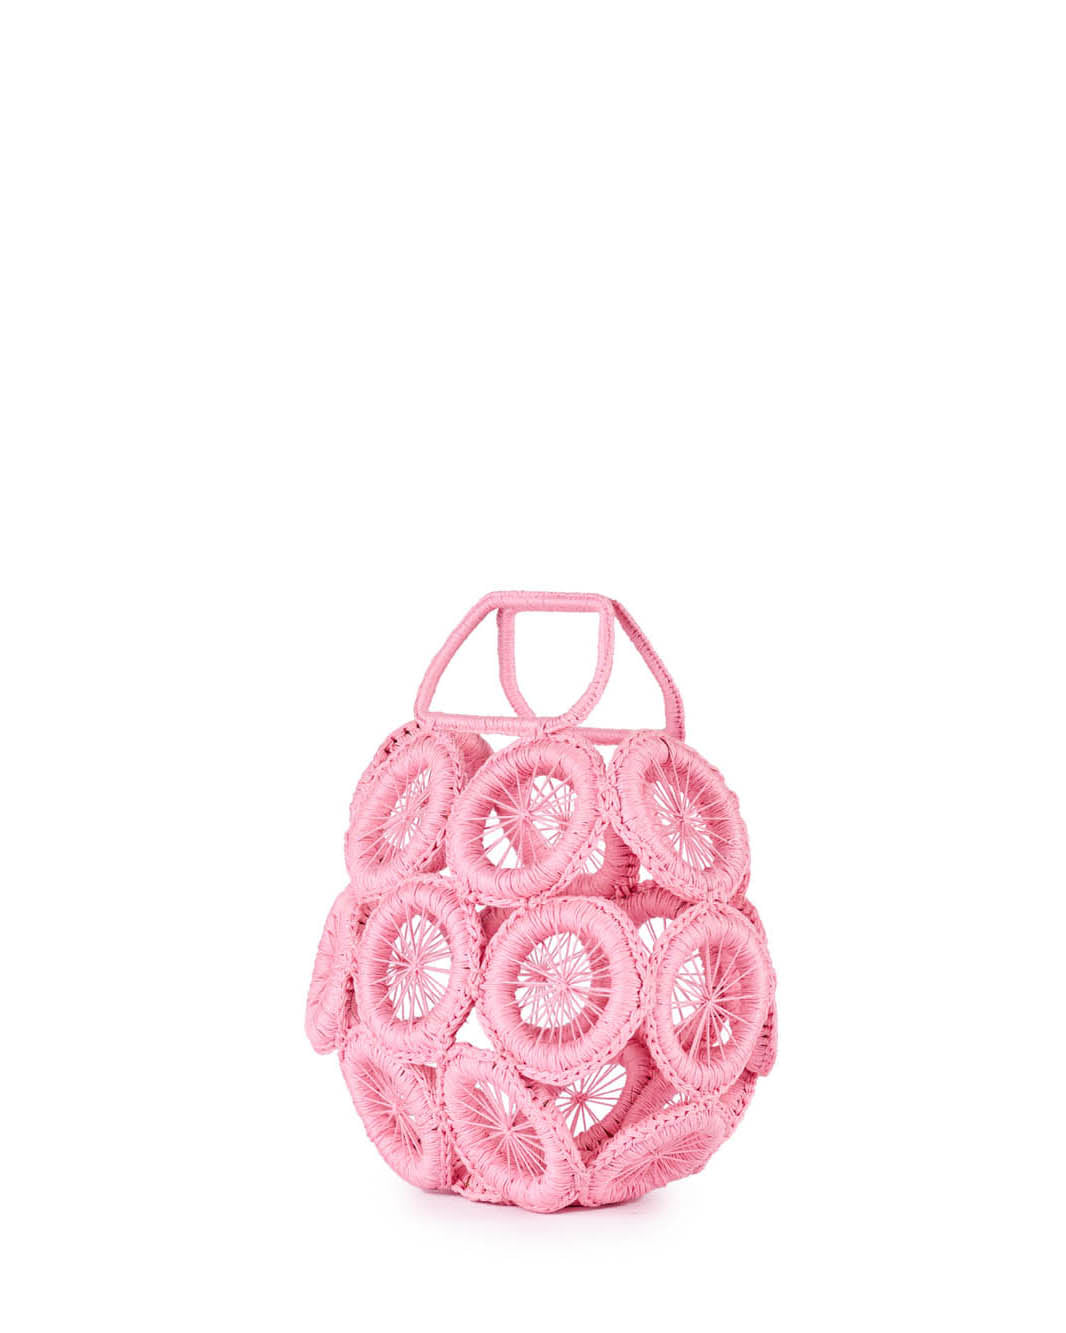 Pink crochet circular handbag with handle on white background